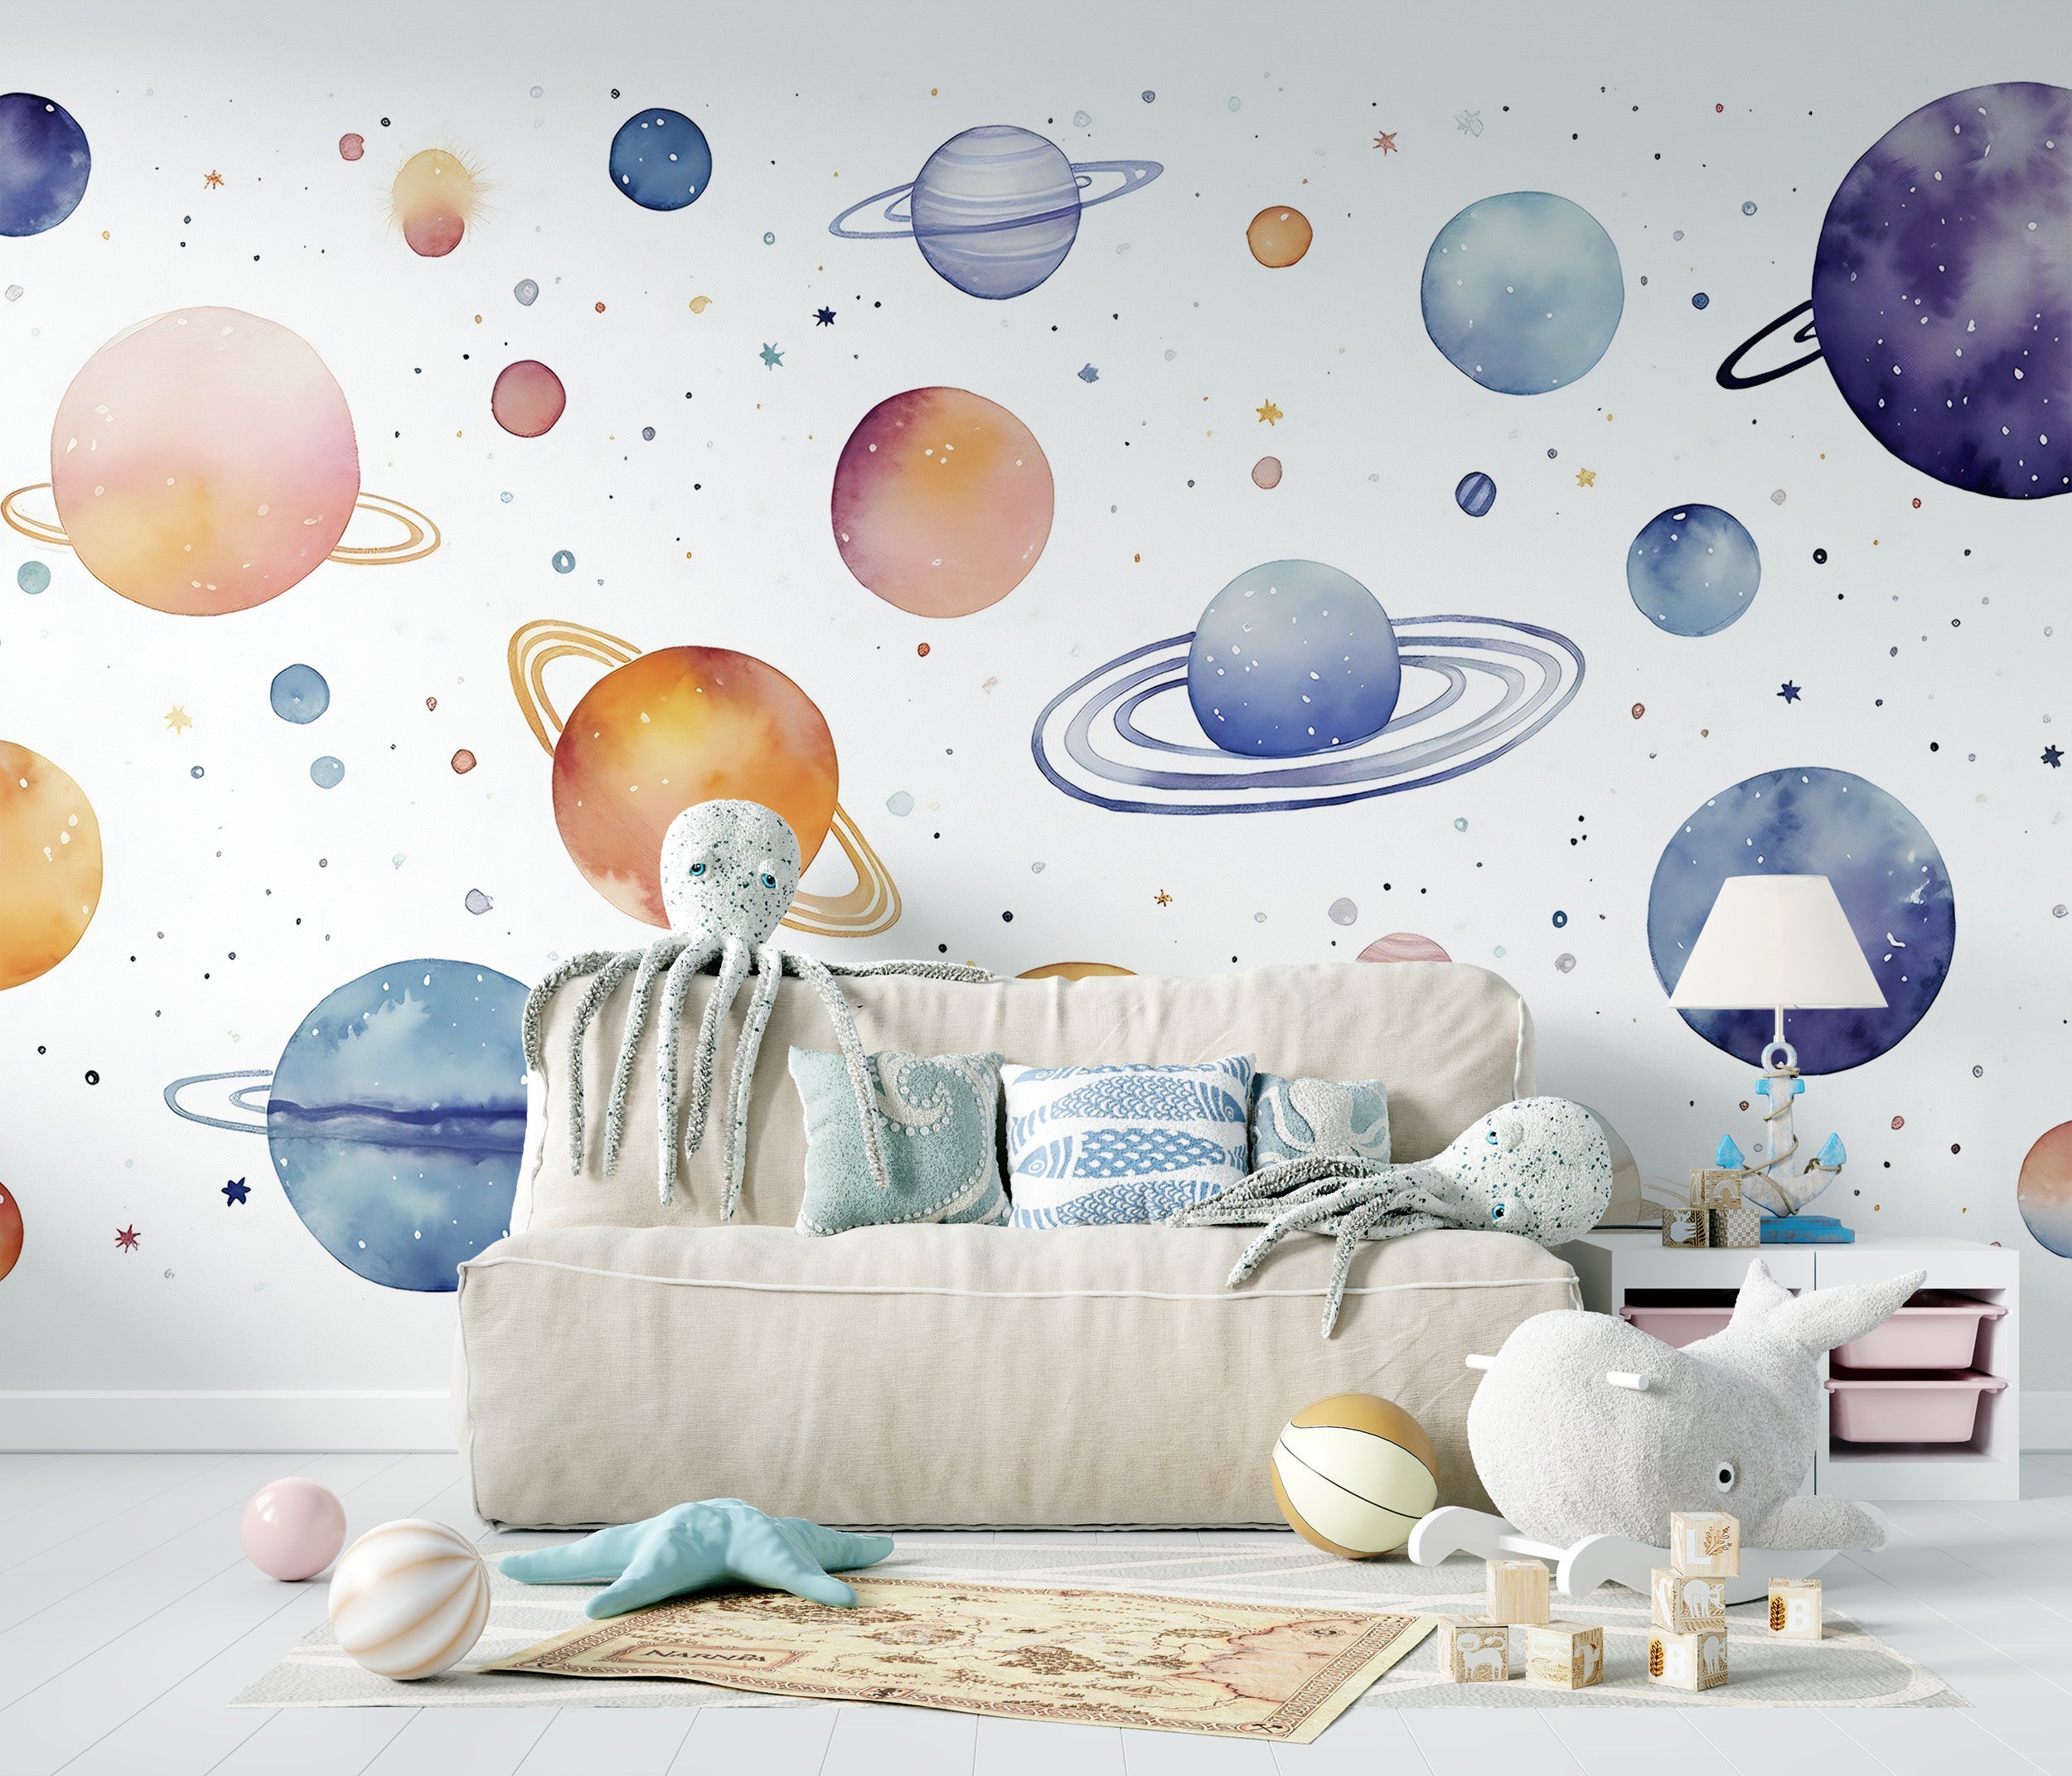 Imaginative Space Theme Wall Mural